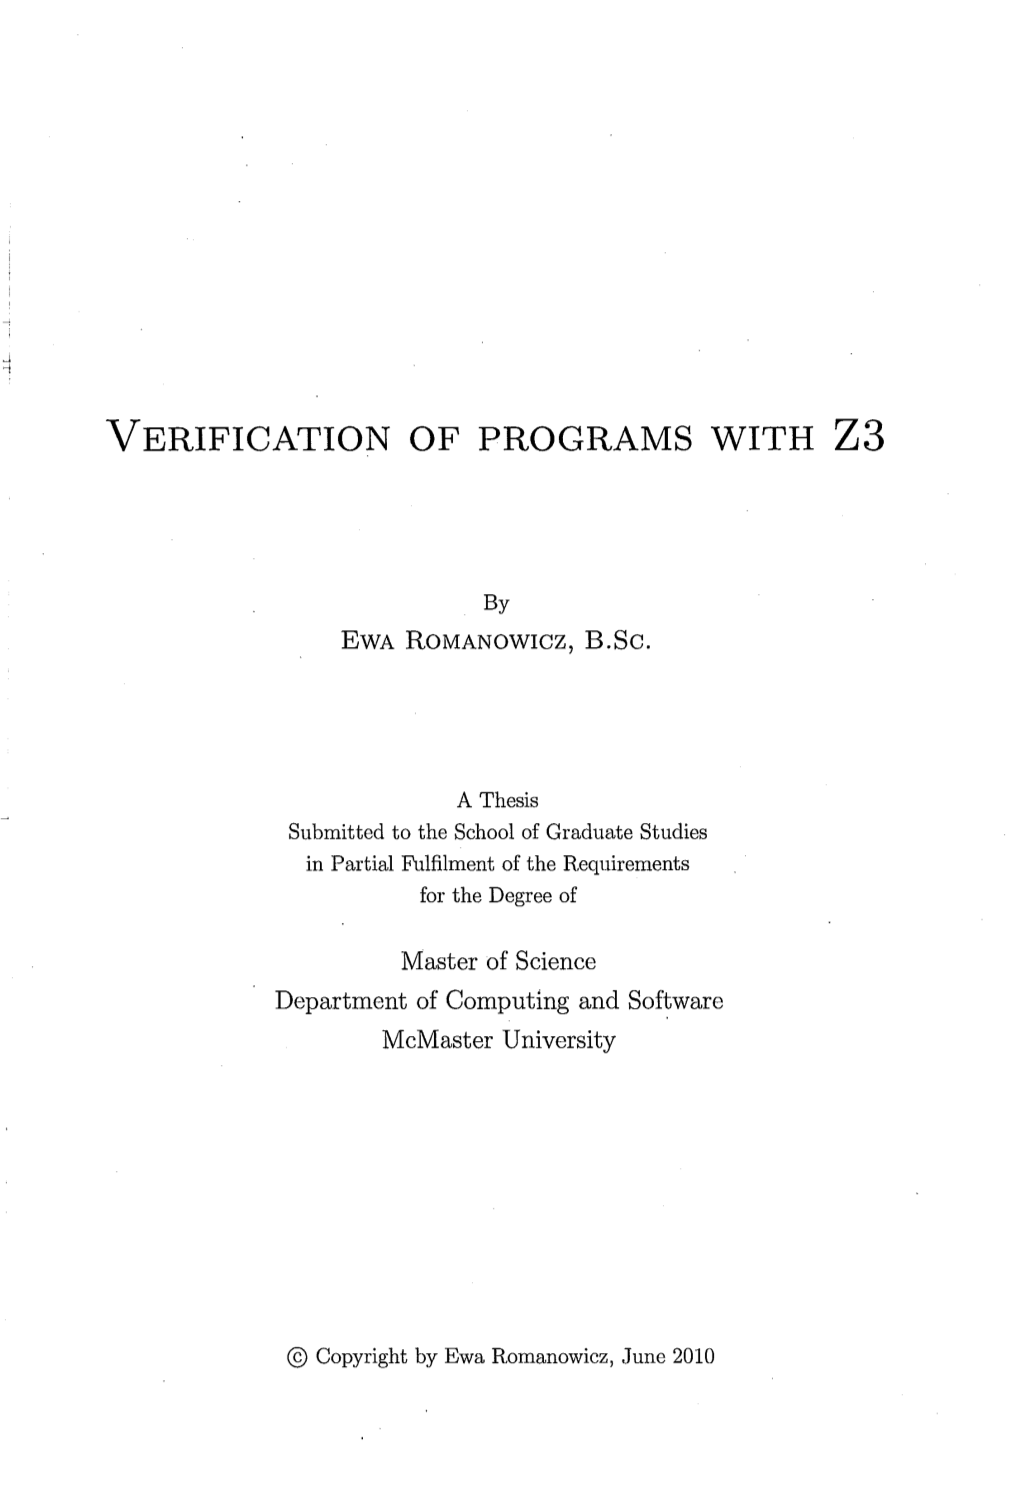 Verification of Programs with Z3